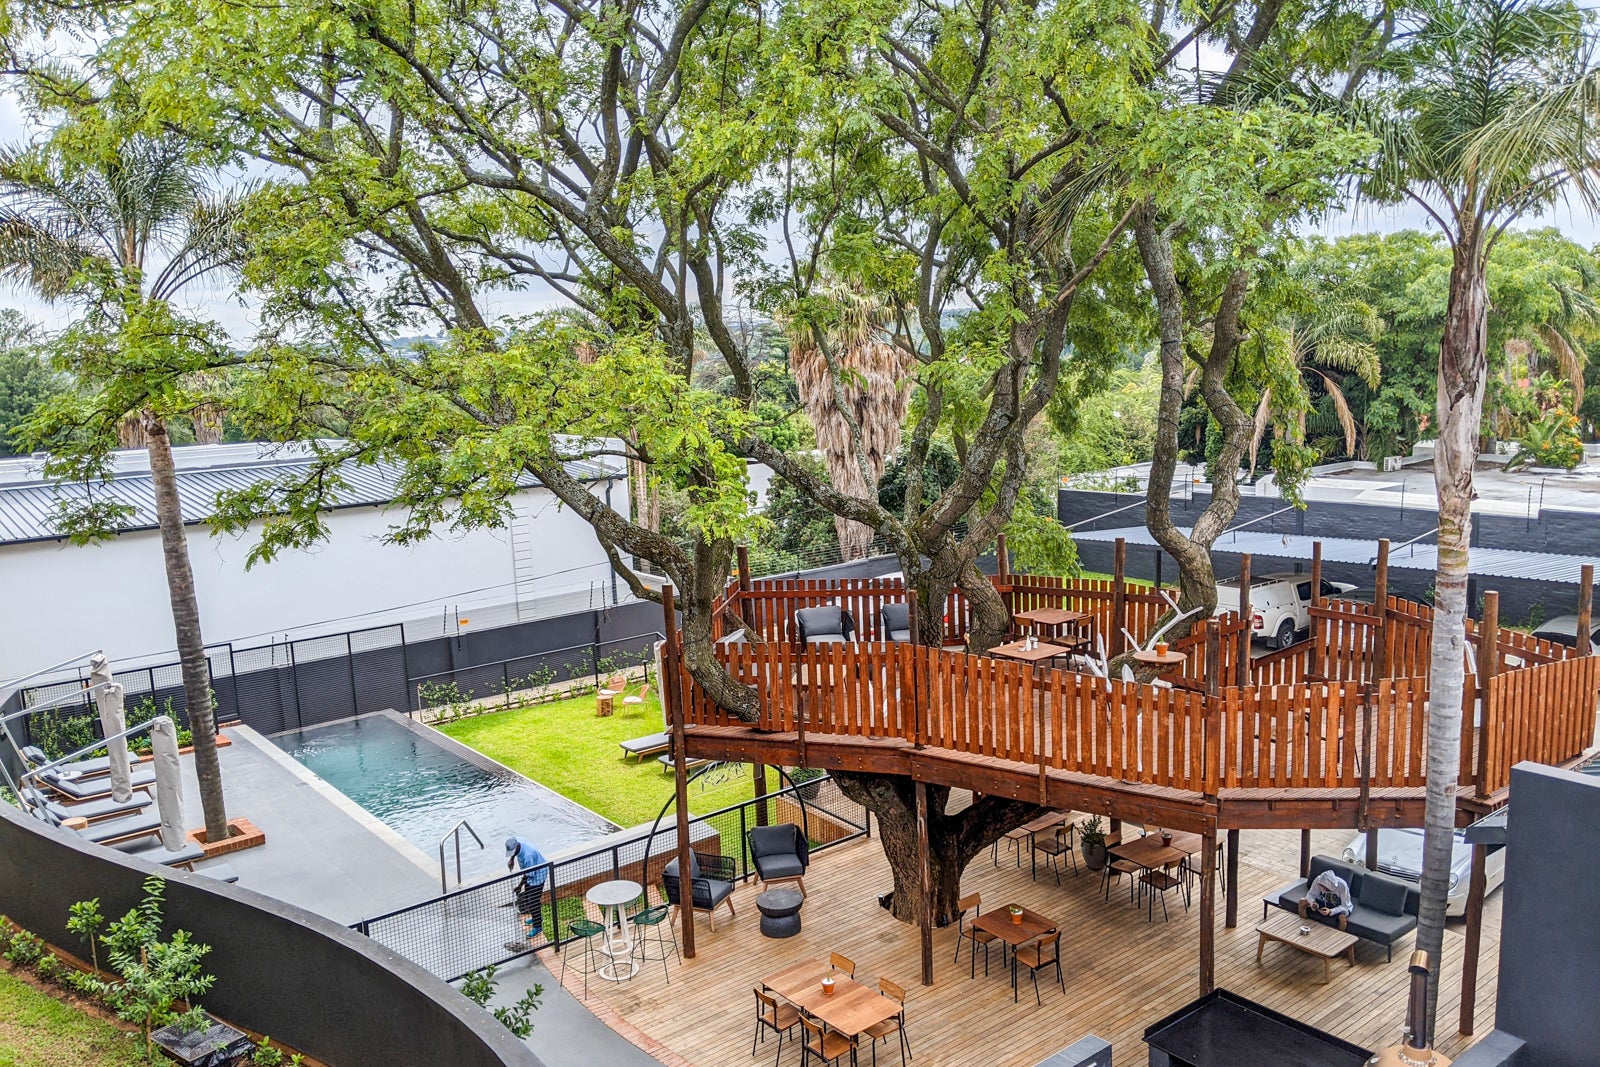 A treehouse restaurant near a pool at a hotel